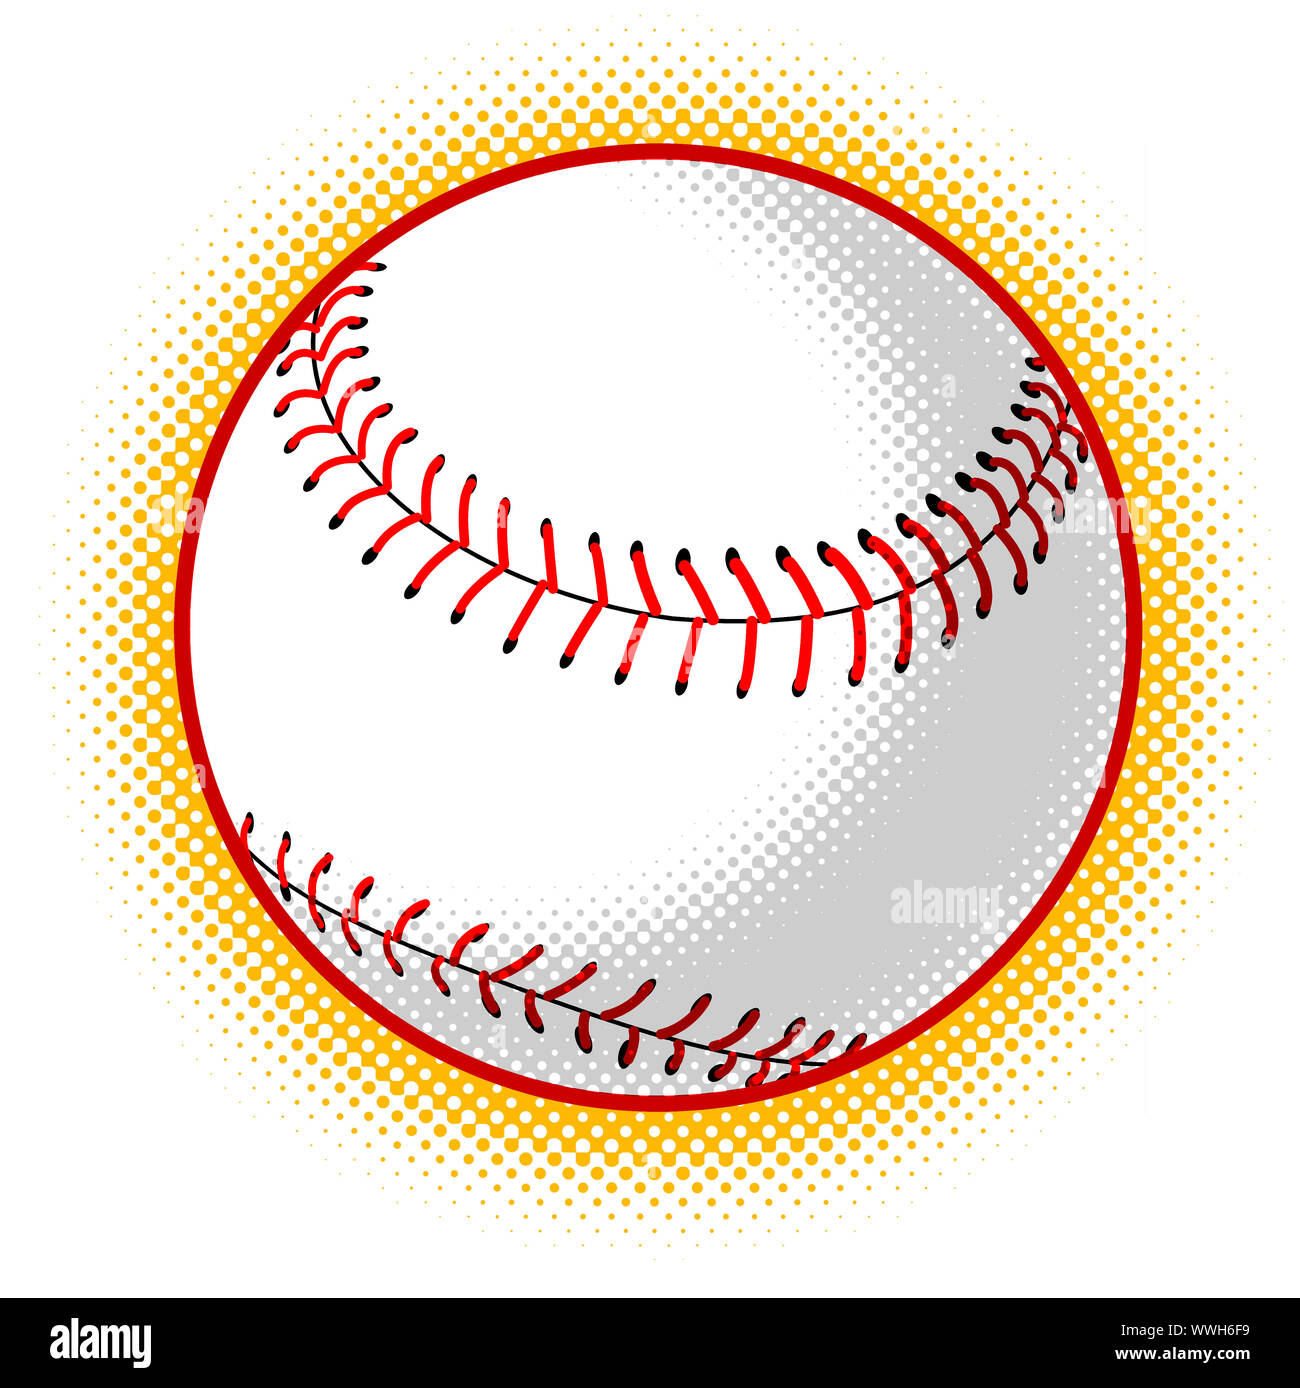 Baseball player hits ball, abstract grunge isolated vector